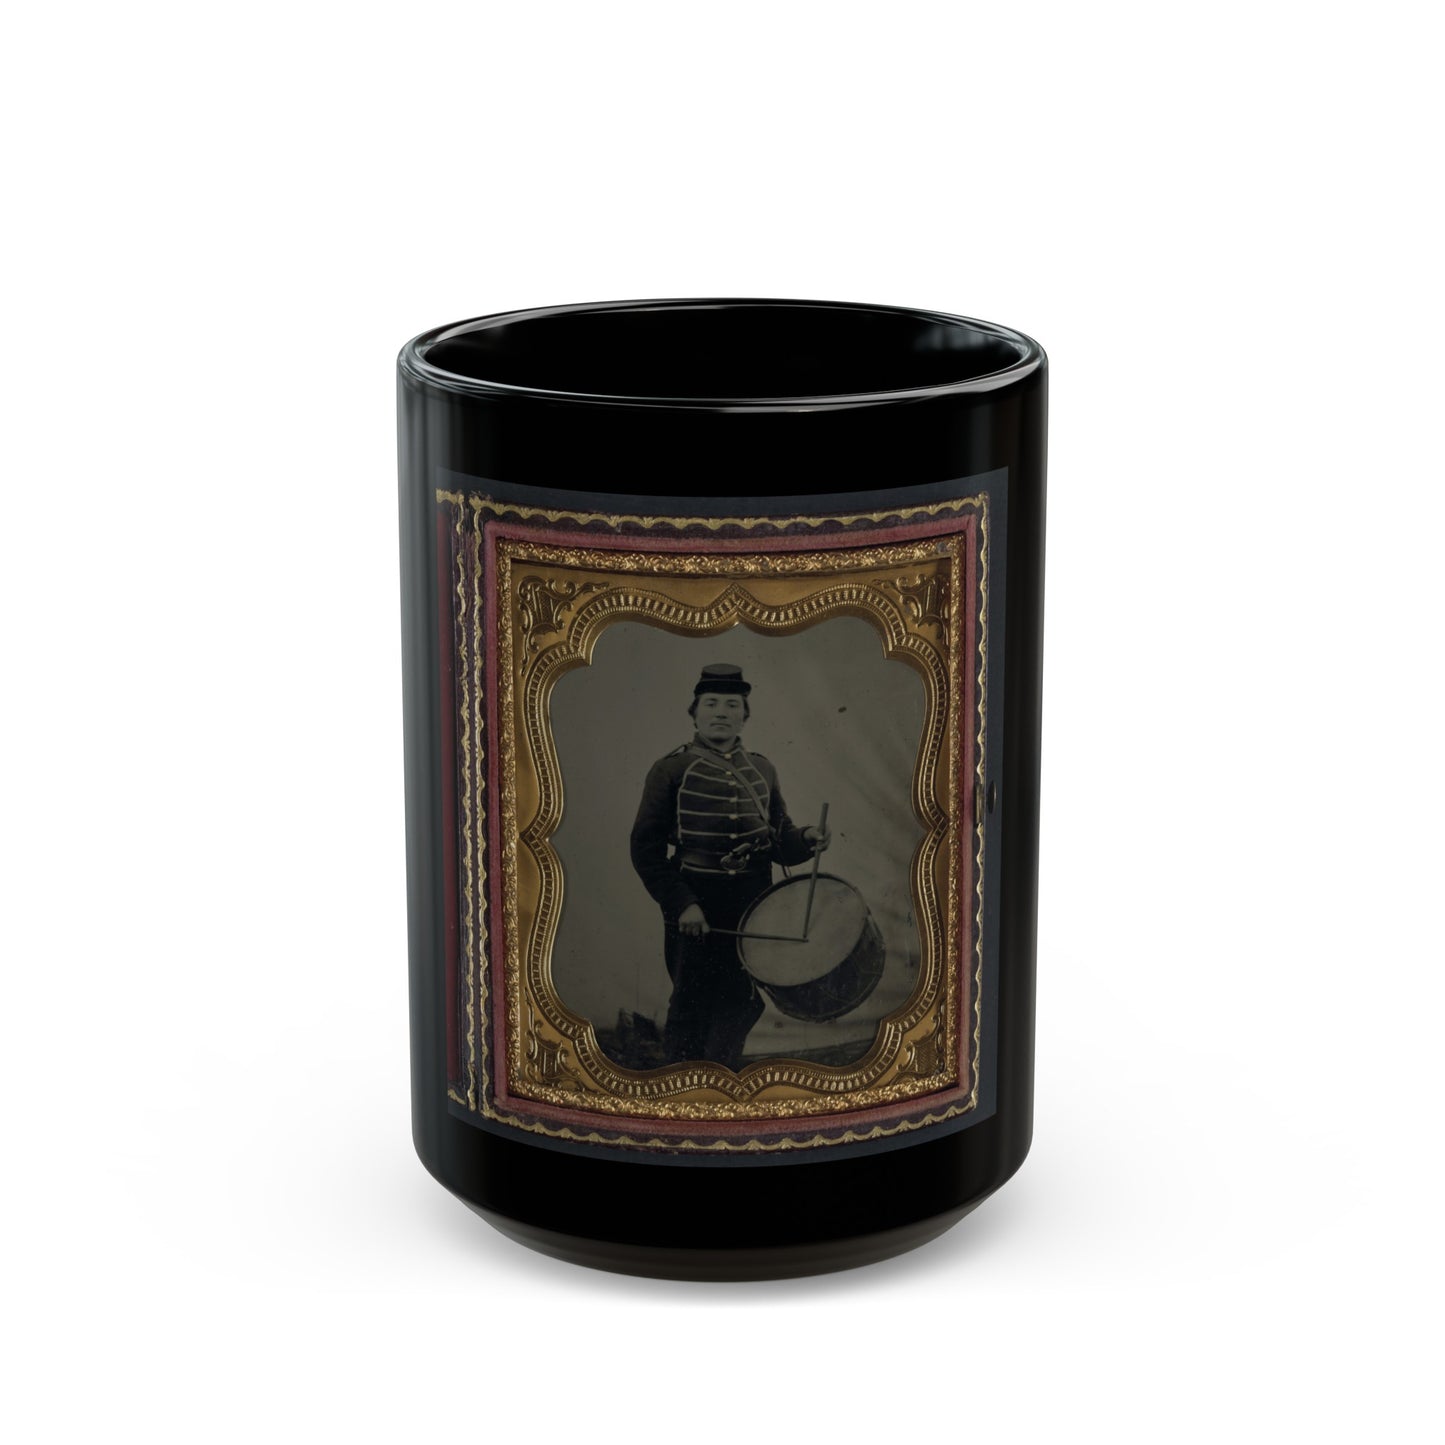 Private William V. Haines Of Company H, 49th Ohio Infantry Regiment, In Uniform And Ohio Volunteer Militia Belt Buckle With Drum (U.S. Civil War) Black Coffee Mug